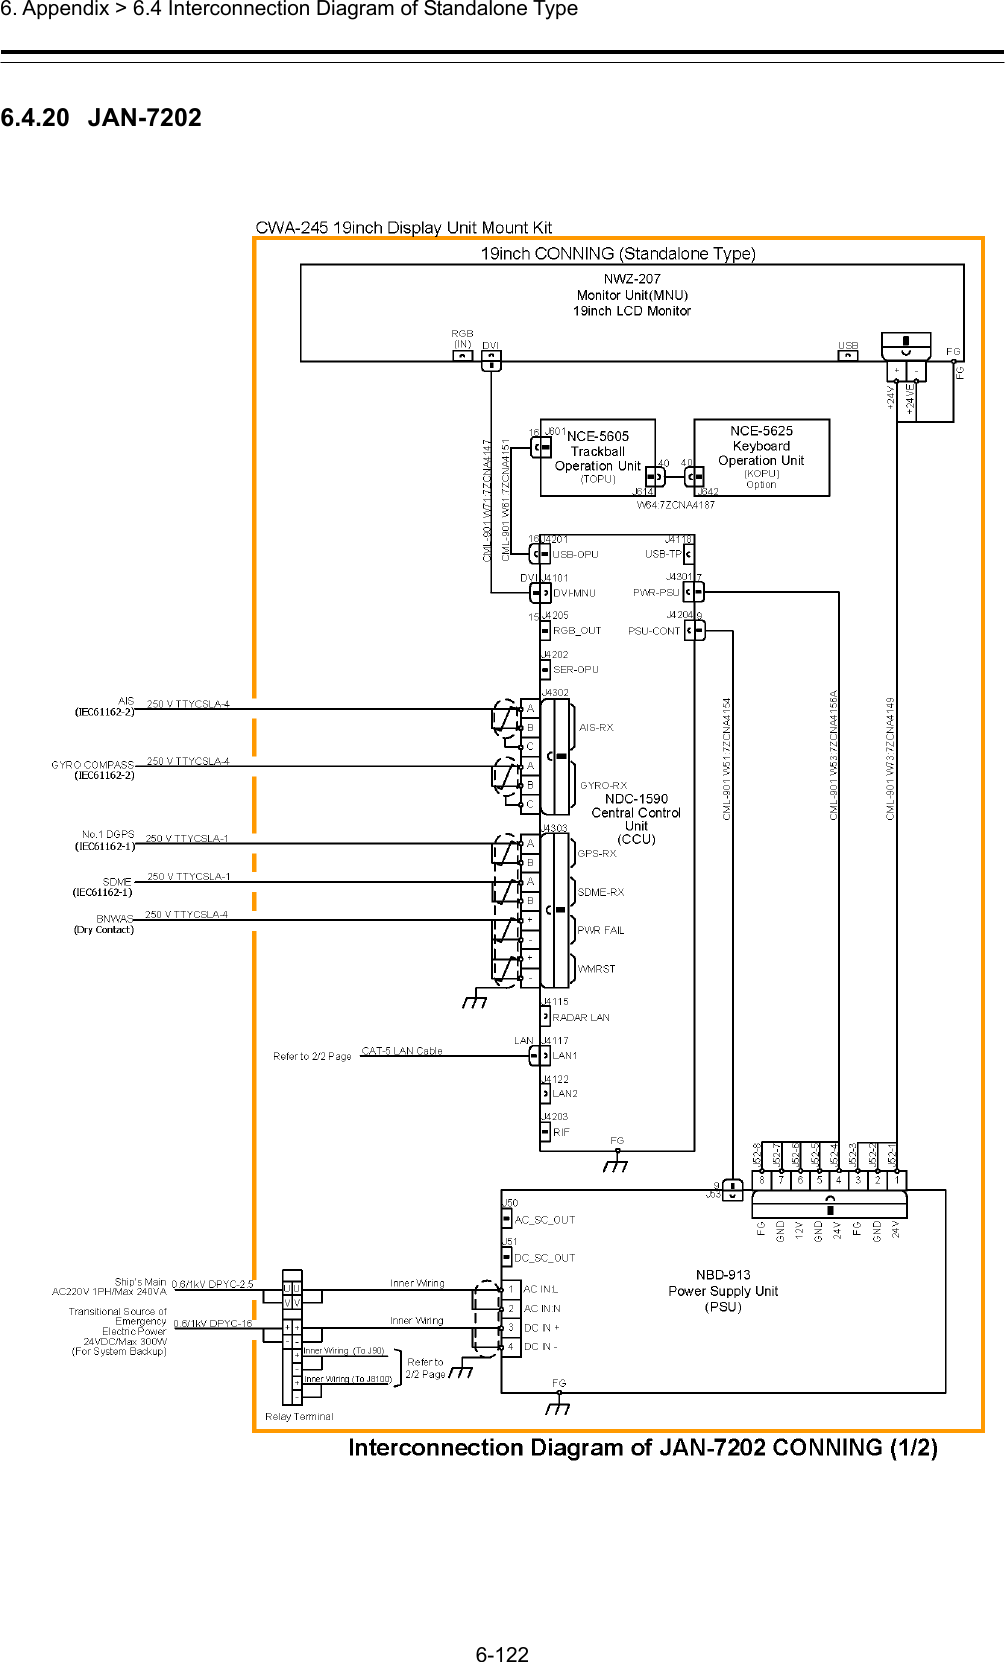  6. Appendix &gt; 6.4 Interconnection Diagram of Standalone Type 6-122  6.4.20  JAN-7202 